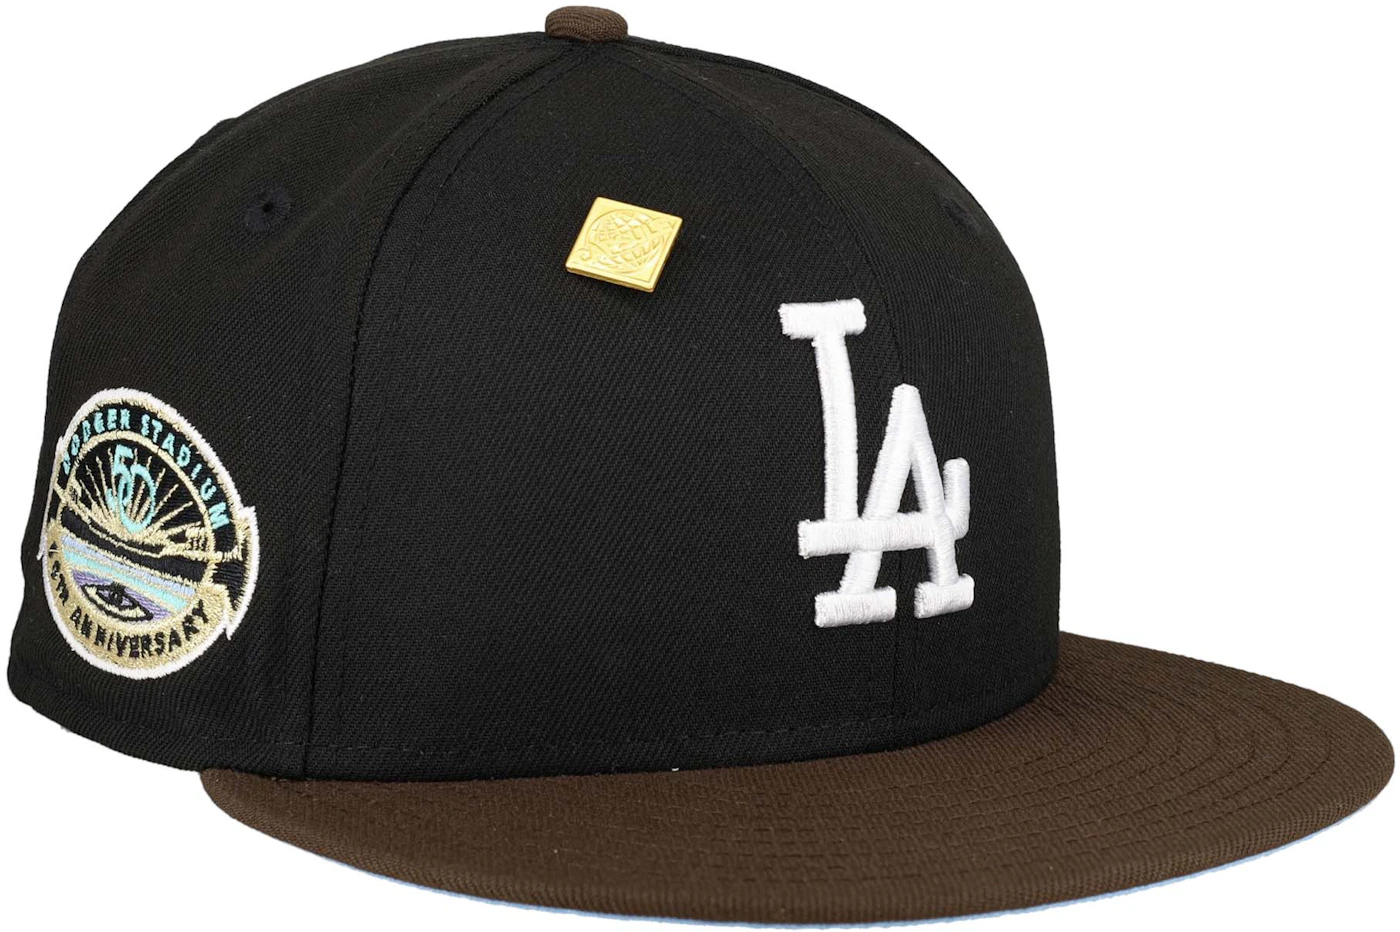 New Era Men's New Era Gold Los Angeles Dodgers Color Pack 59FIFTY